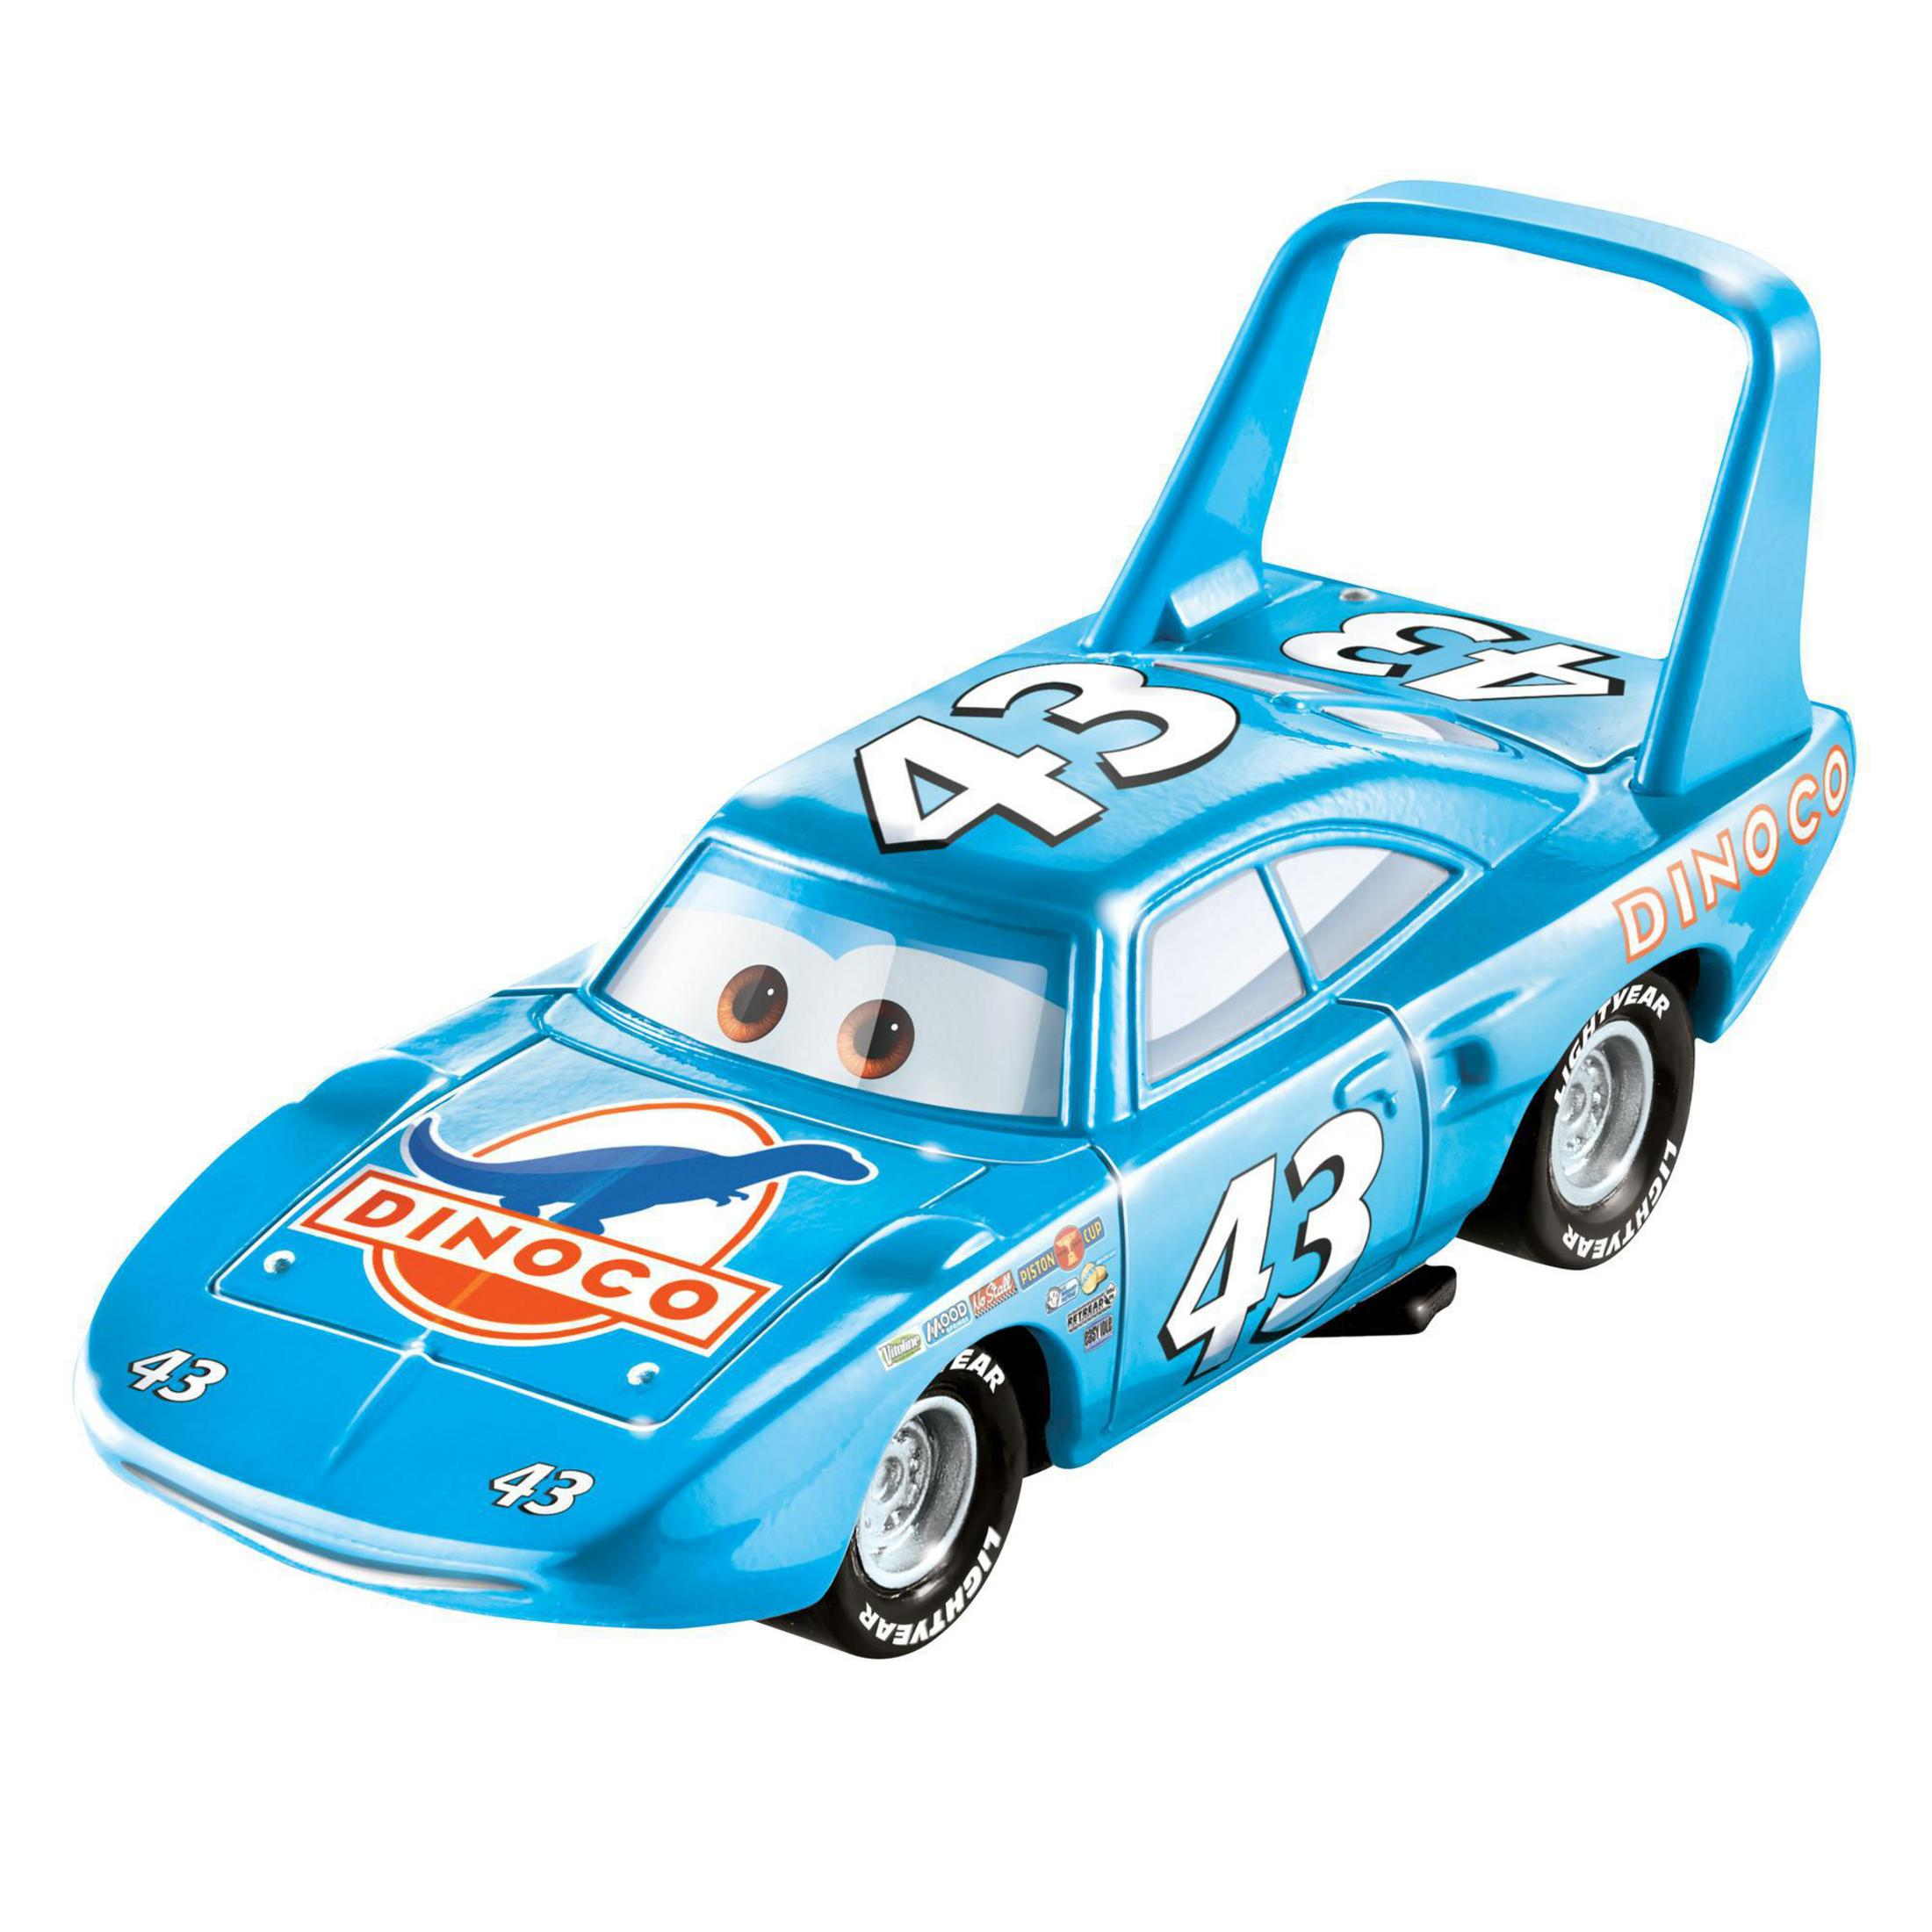 CARS GYM69 FARBWECHSEL FAHRZEUGE Spielzeugauto Mehrfarbig SORTIMENT